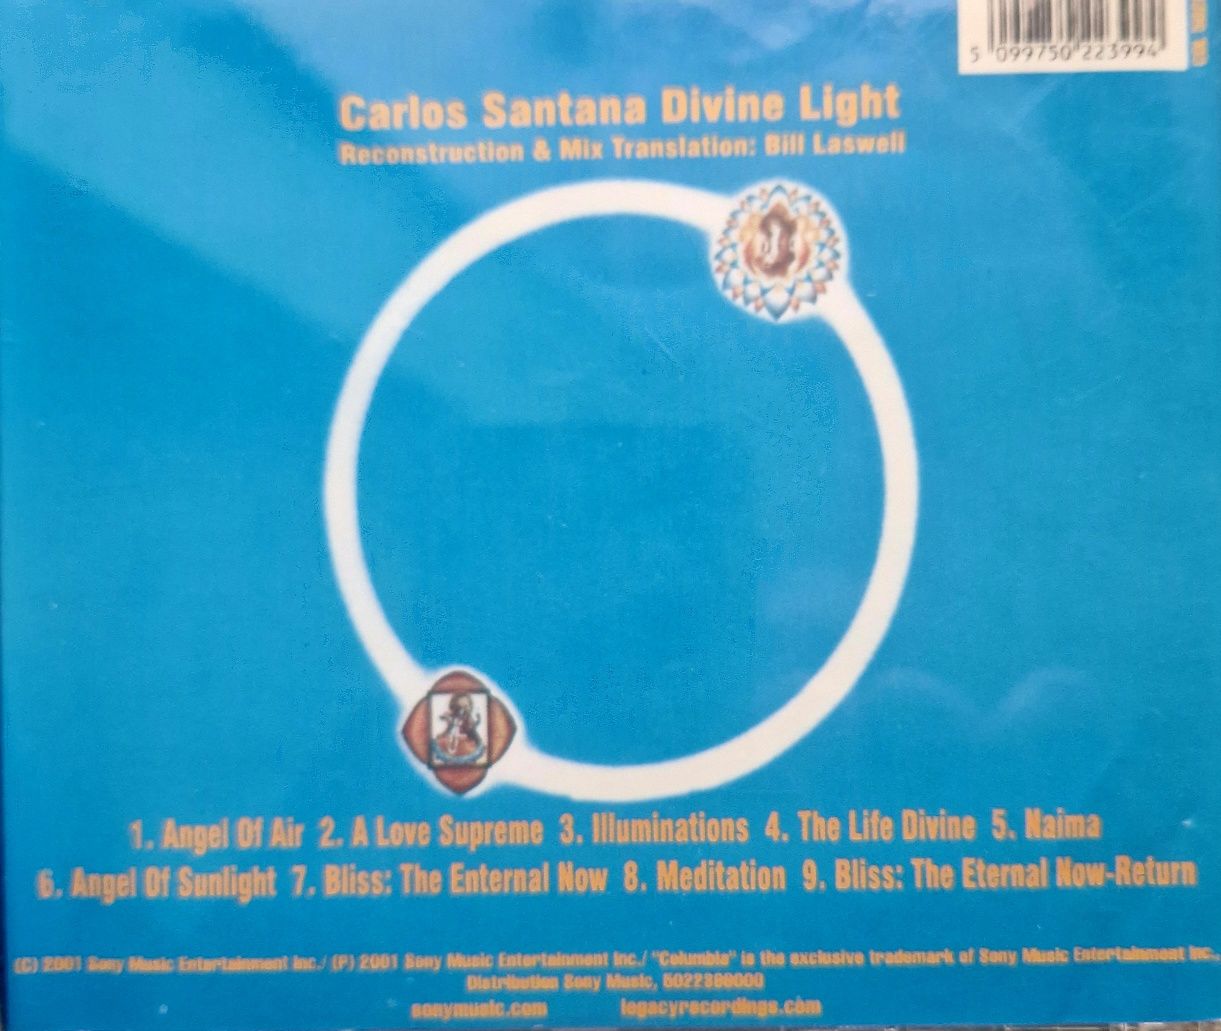 Carlos Santana Divine Light